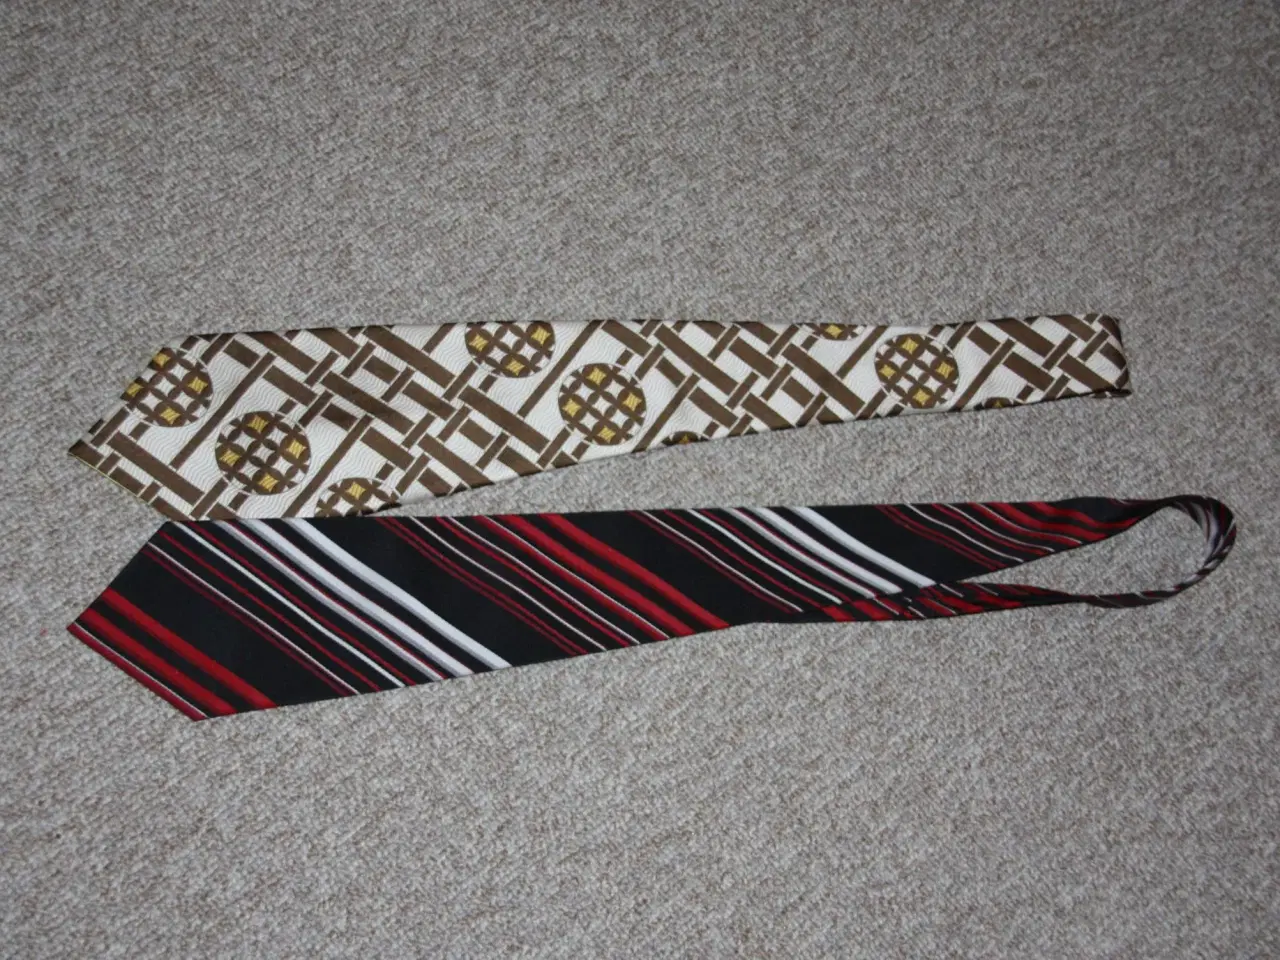 Billede 1 - Retro slips fra 60'erne stk.pris - 50 kr